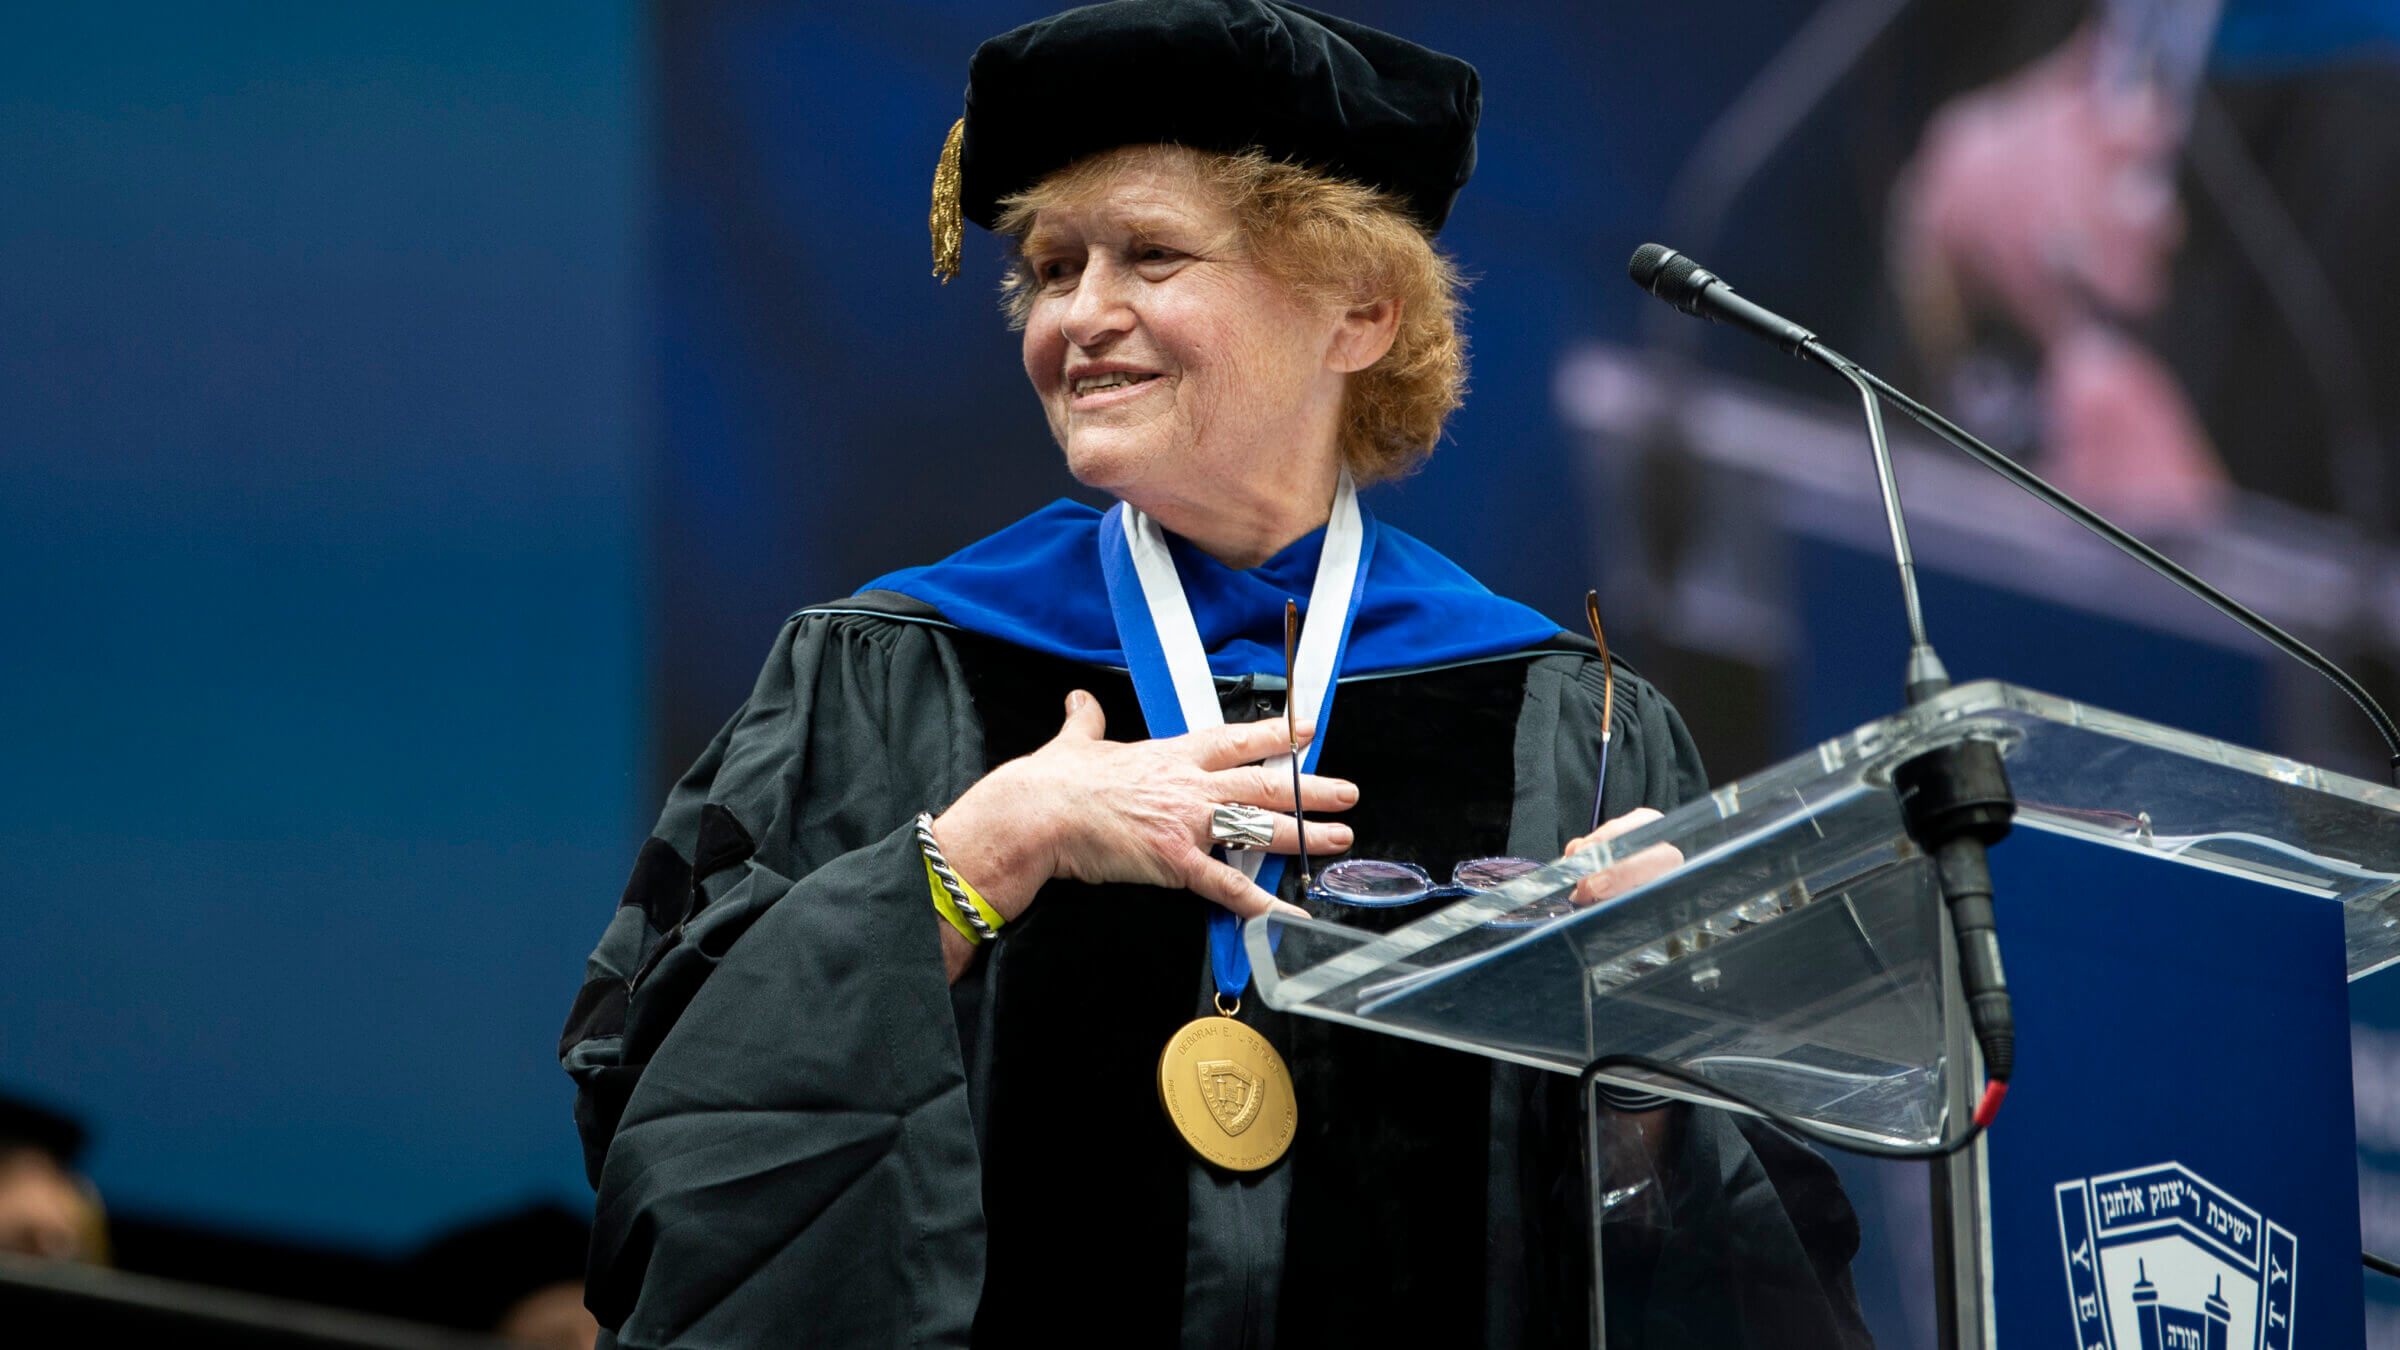 Ambassador Deborah Lipstadt gave the commencement address at Yeshiva University on May 26, 2022